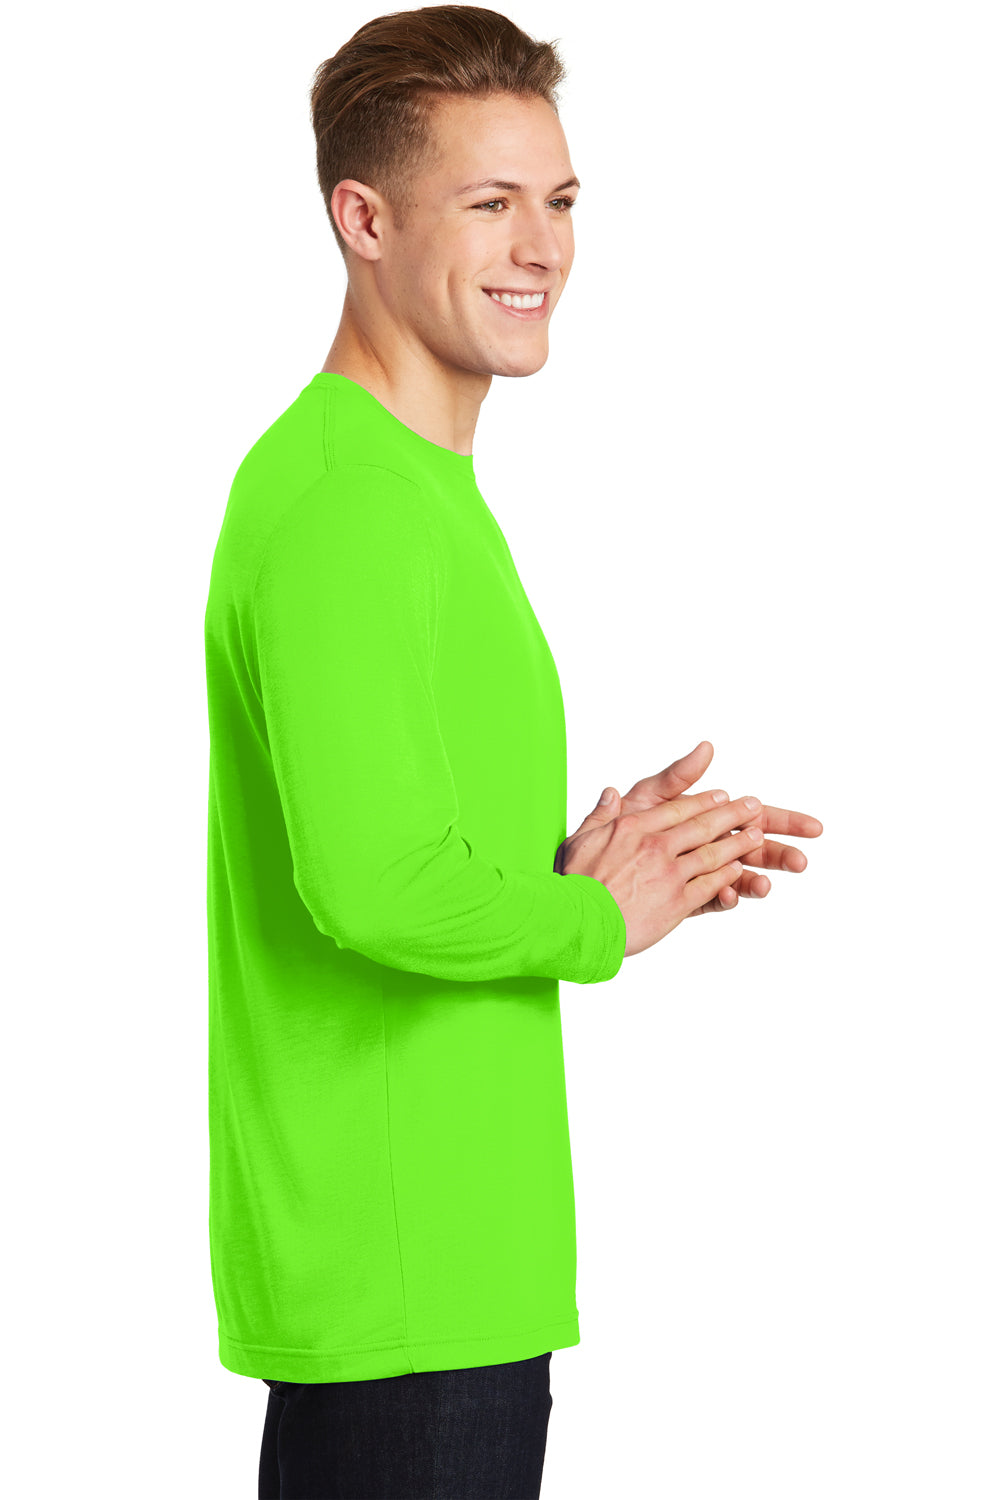 Sport-Tek ST450LS Mens Competitor Moisture Wicking Long Sleeve Crewneck T-Shirt Neon Green Side